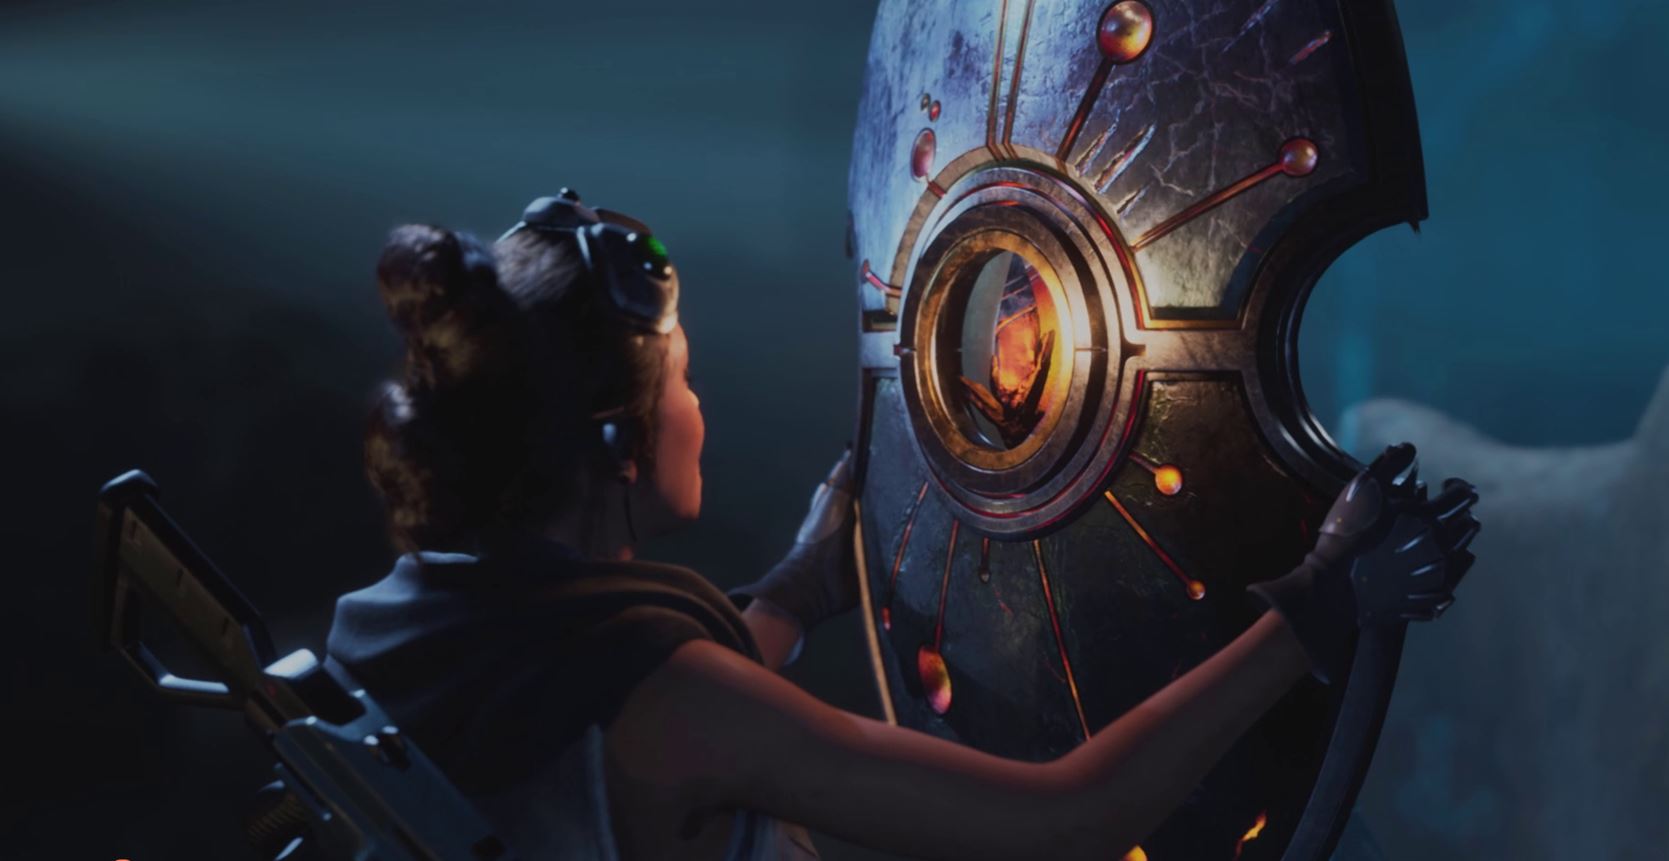 Half-Life Alyx Trailer Showcases Potentially Revolutionary VR Controls